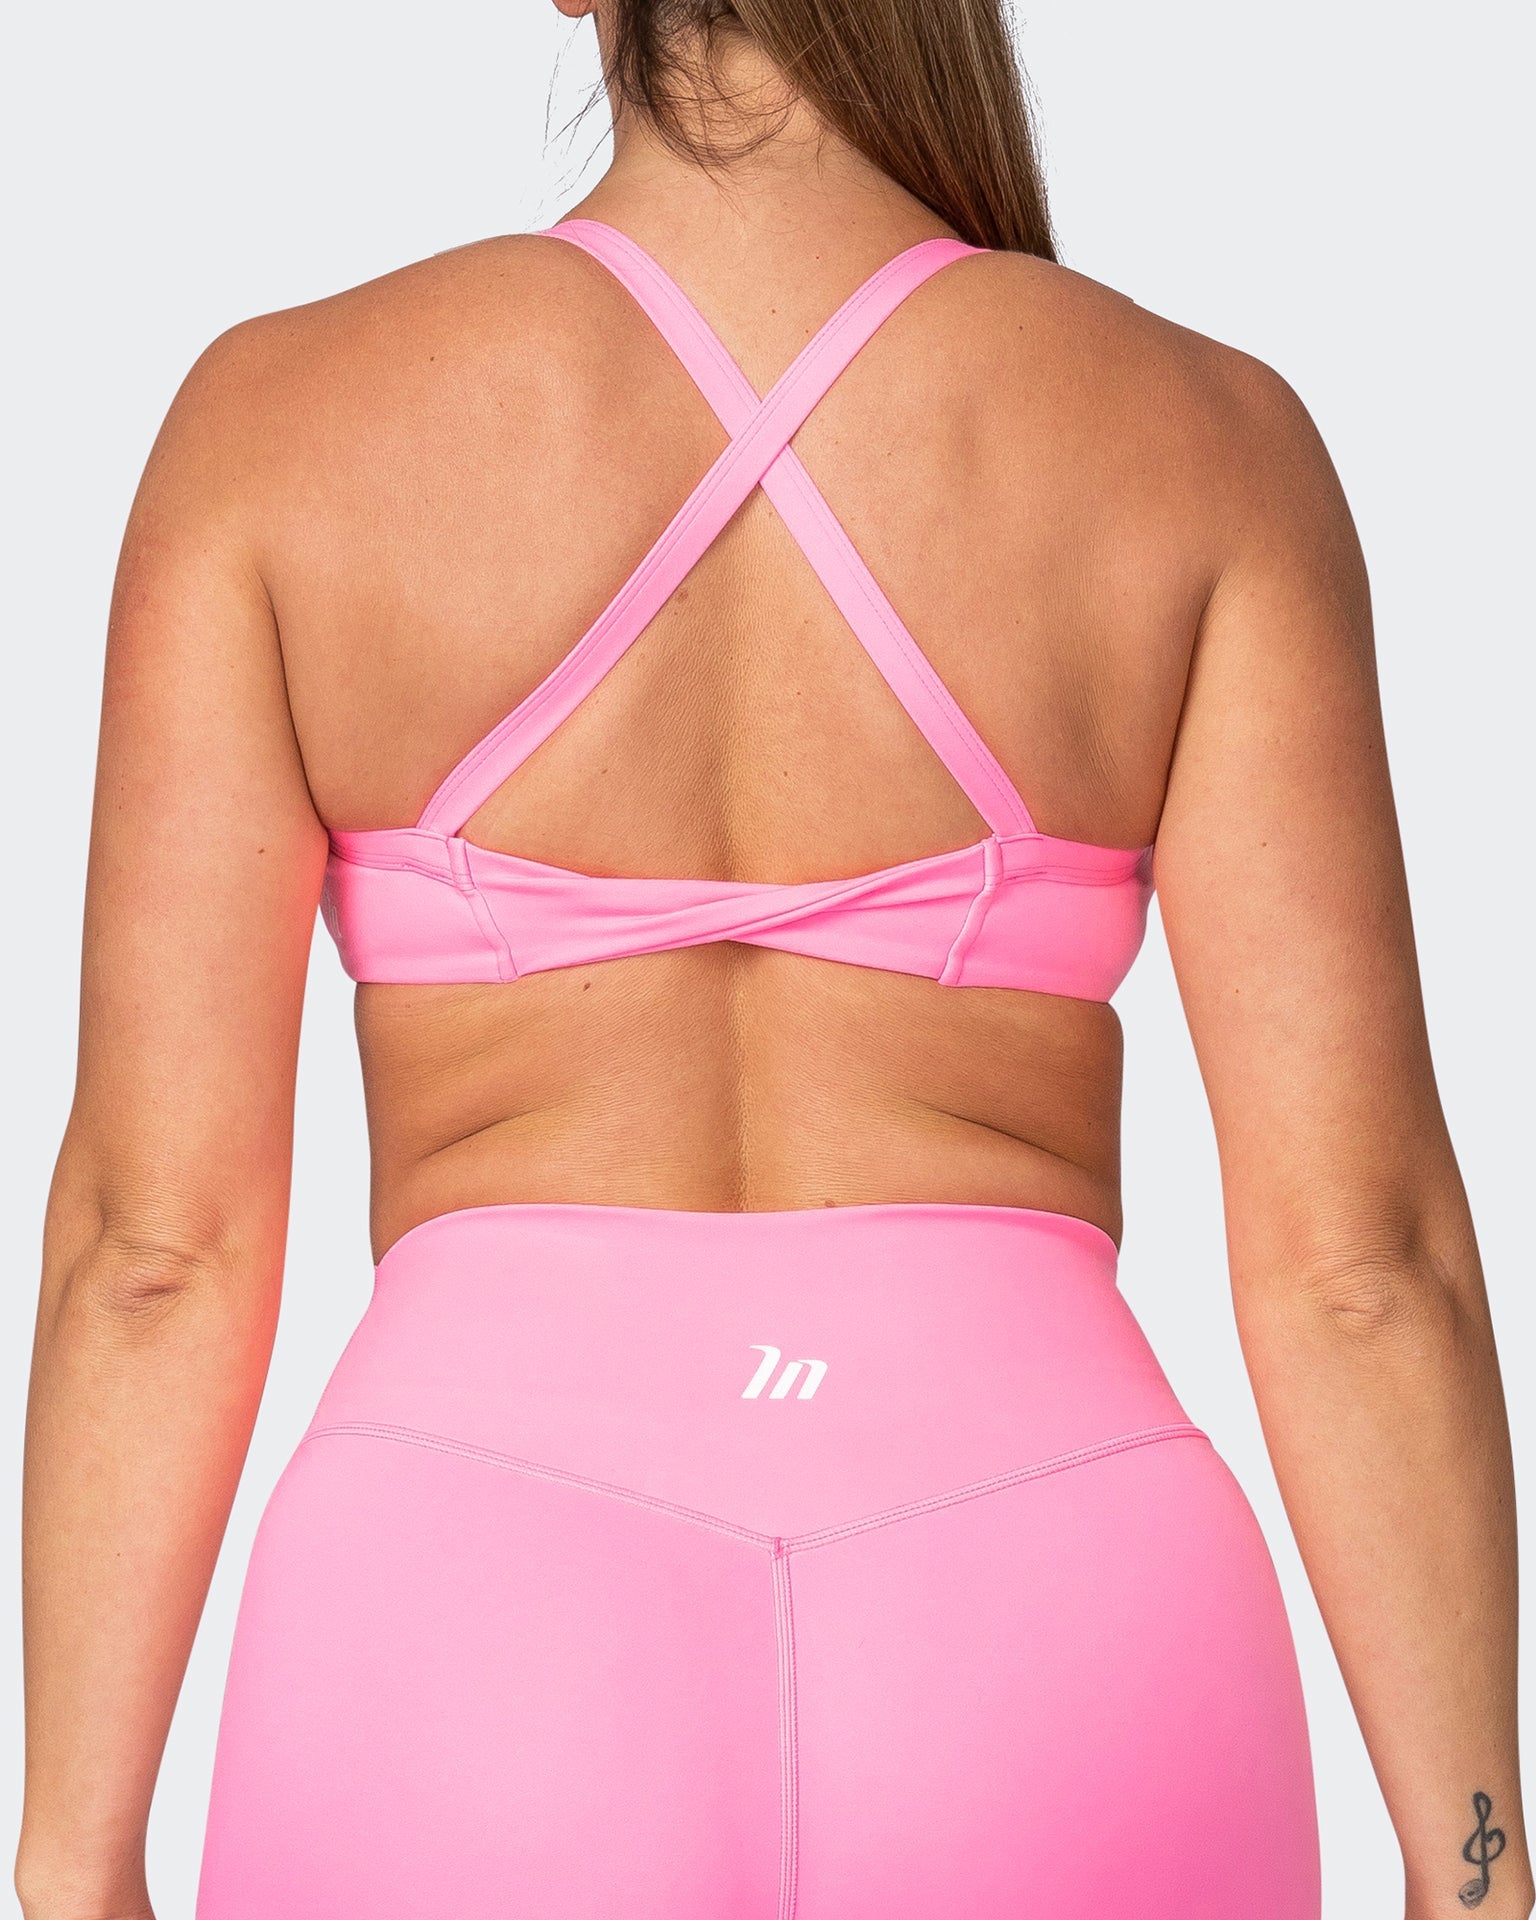 musclenation Sports Bras Paradise Bralette - Shocking Pink